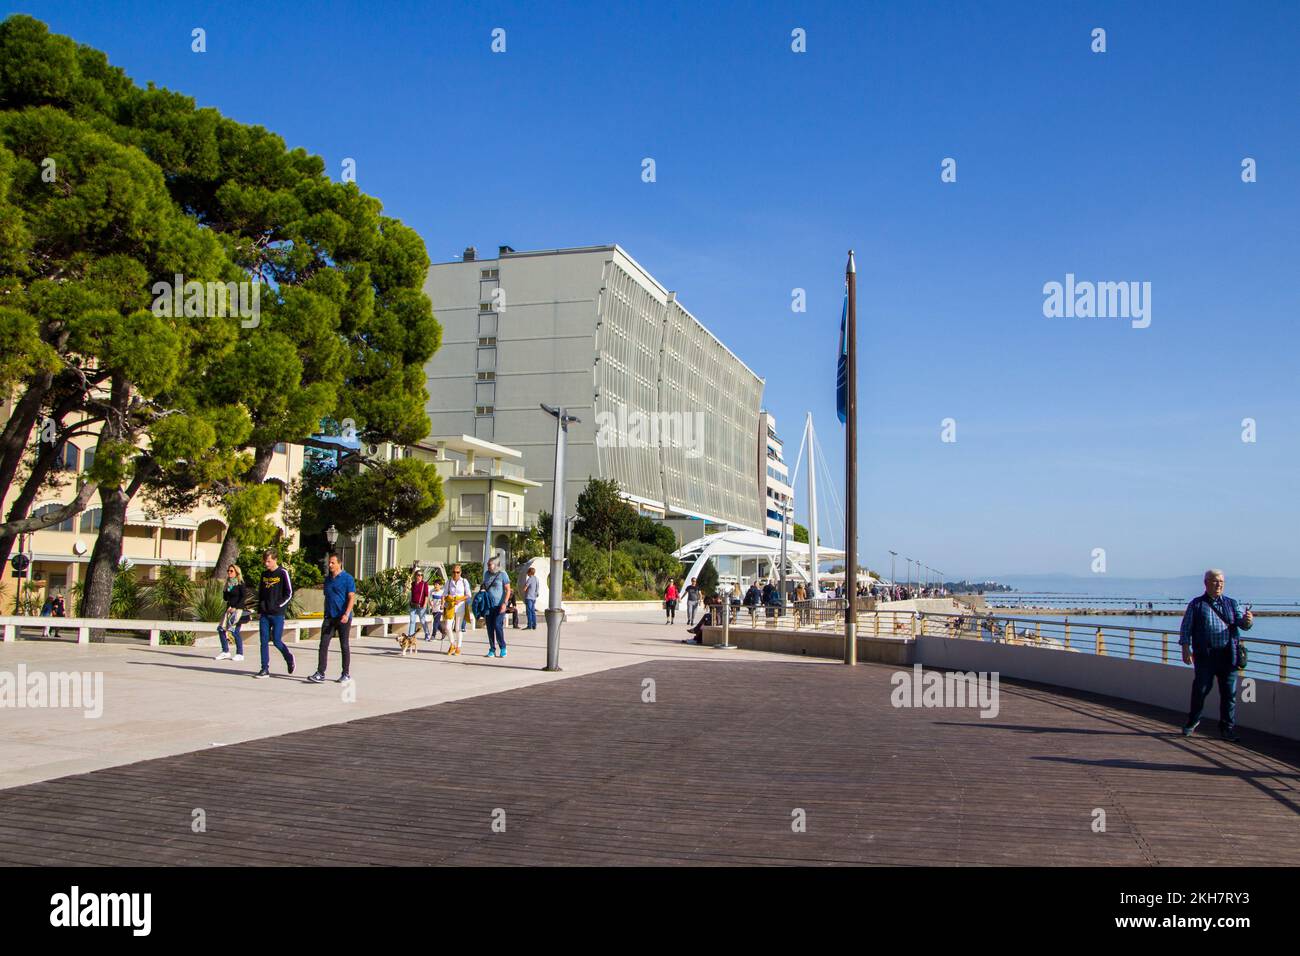 The Nazario Sauro walk, modern architecture and sea, street view Stock Photo